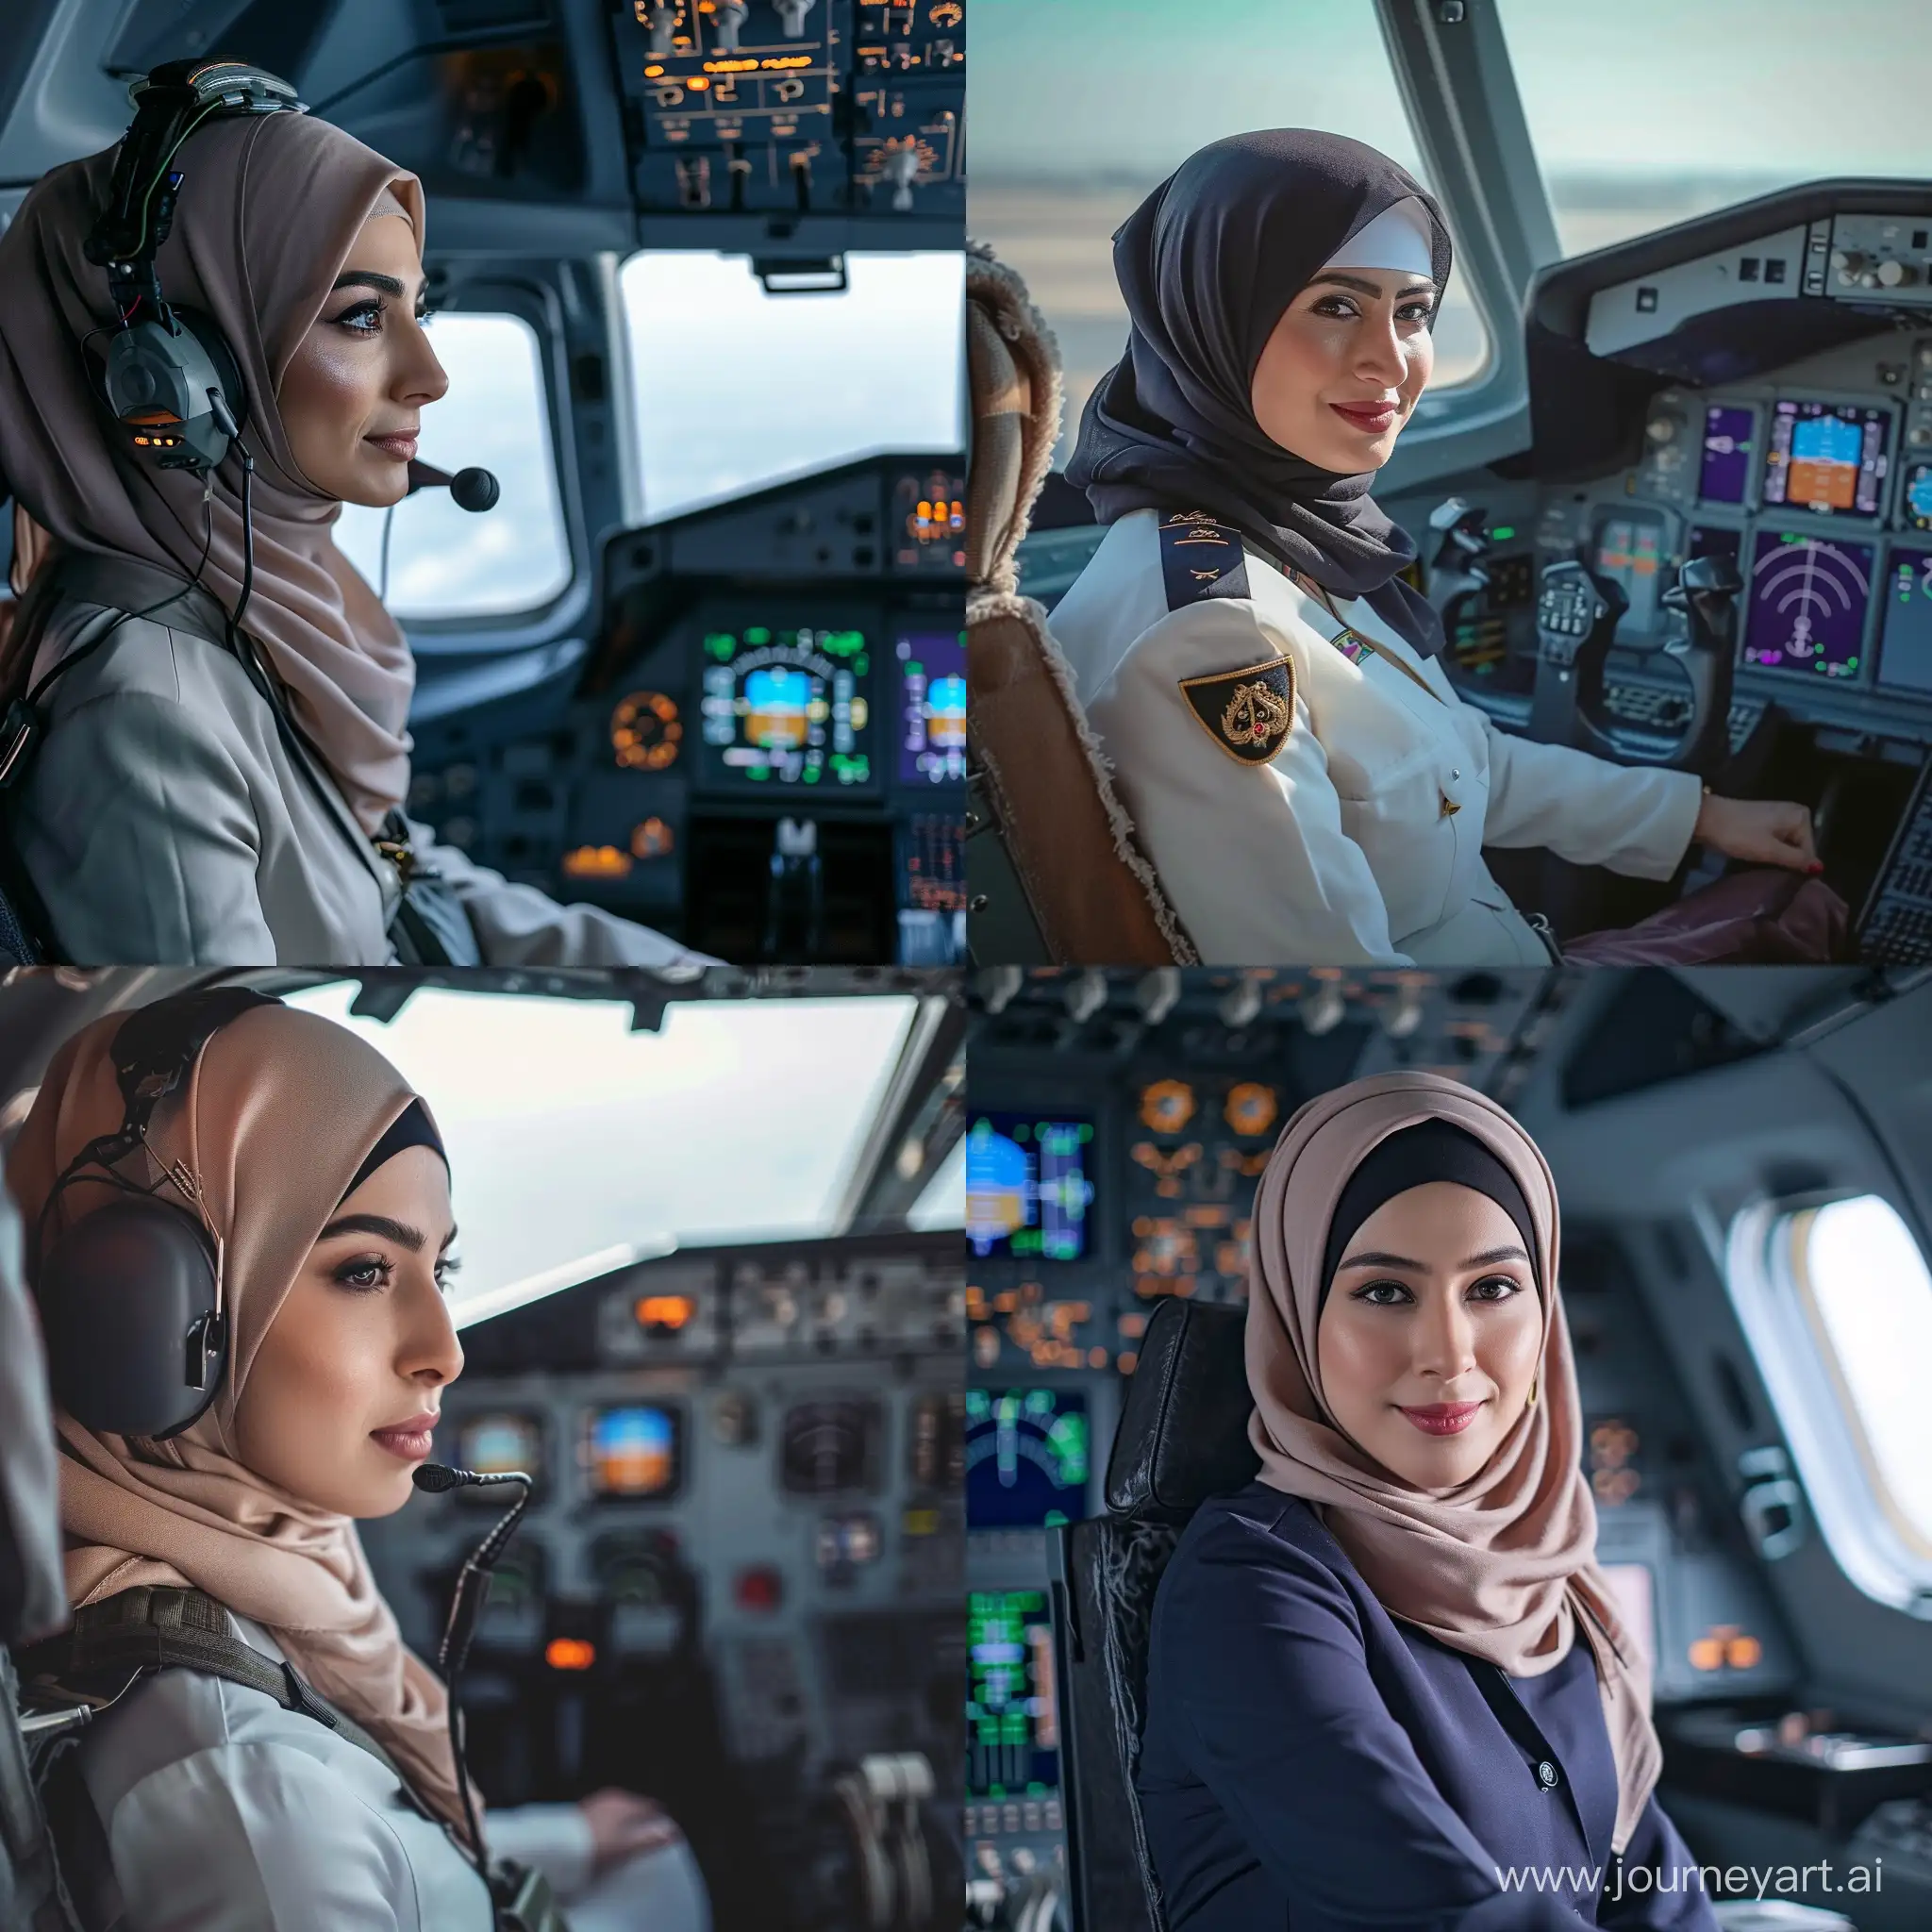 Muslim-Woman-Airplane-Pilot-in-a-11-Aspect-Ratio